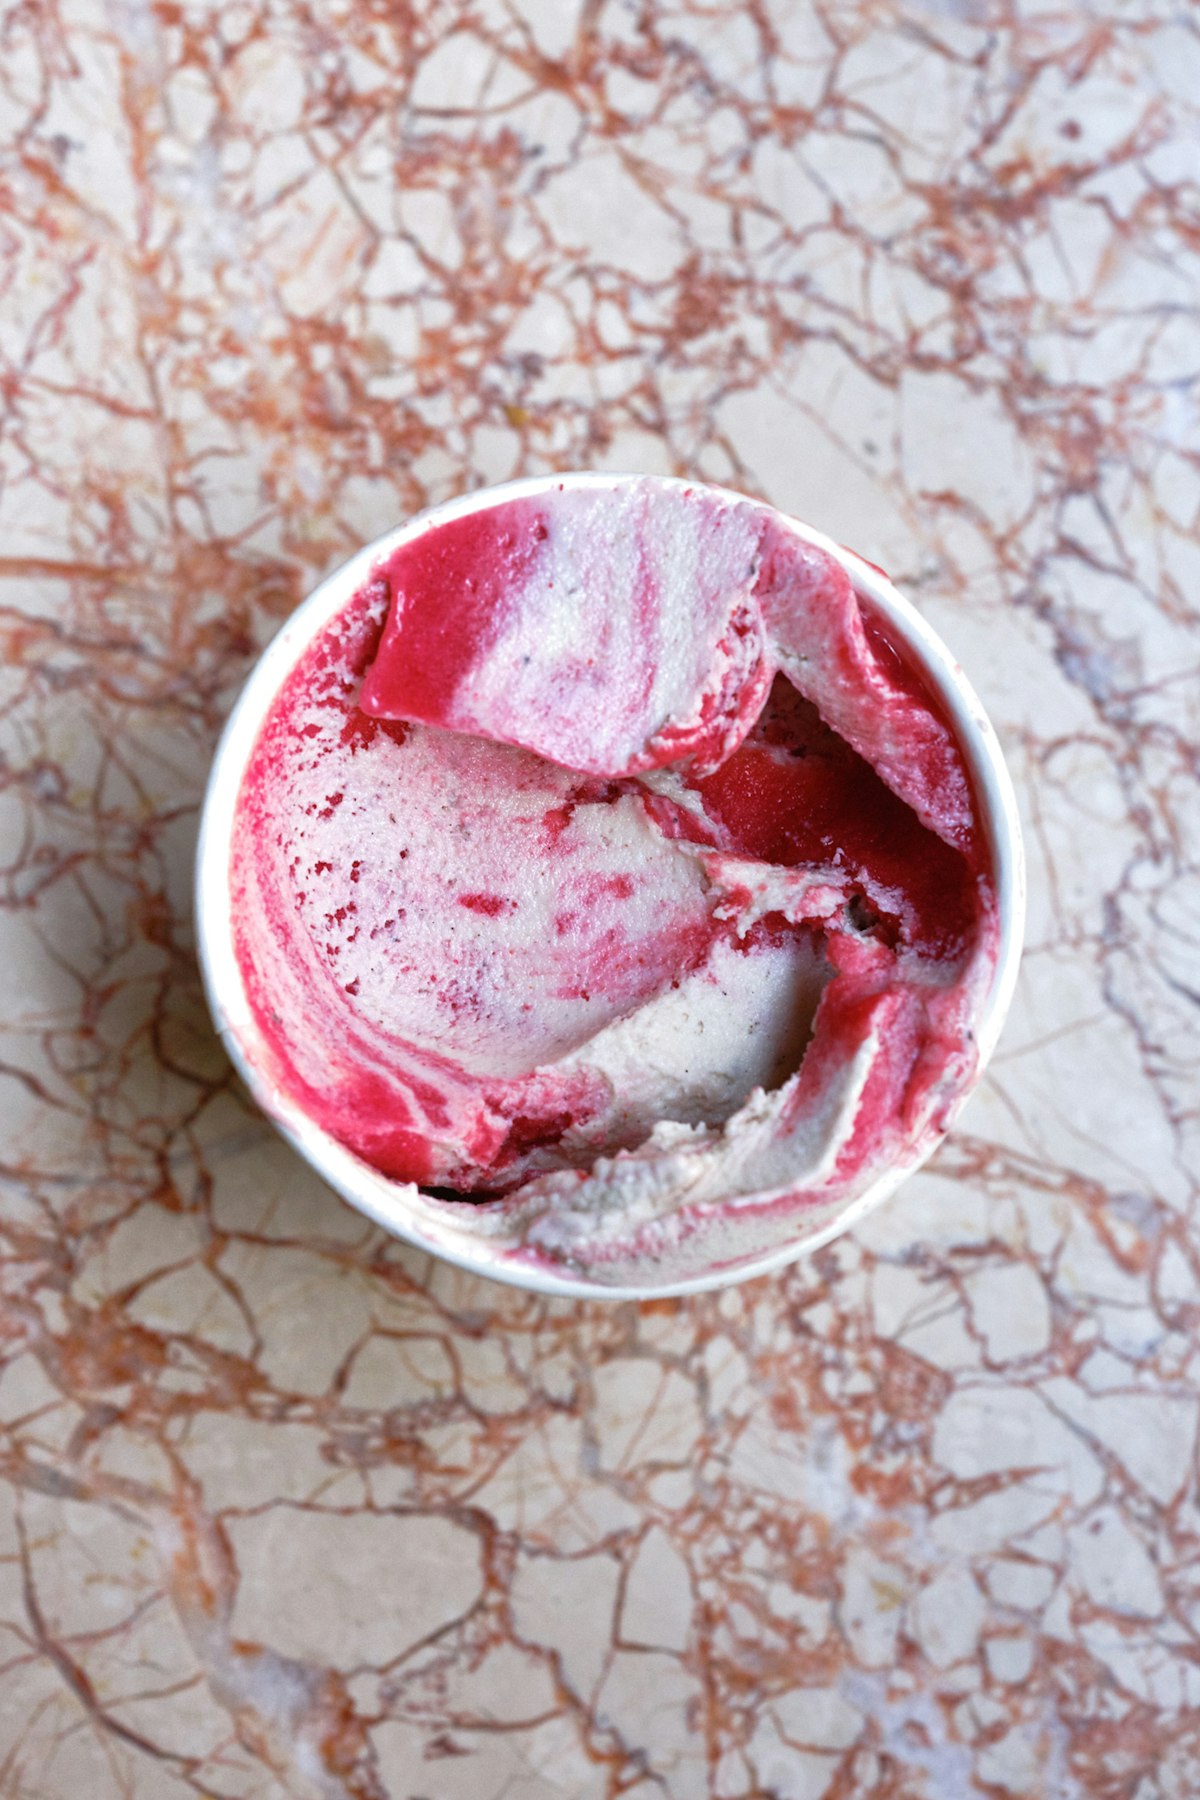 https://images.101cookbooks.com/berry-swirl-ice-cream-vegan-v.jpg?w=1200&auto=format